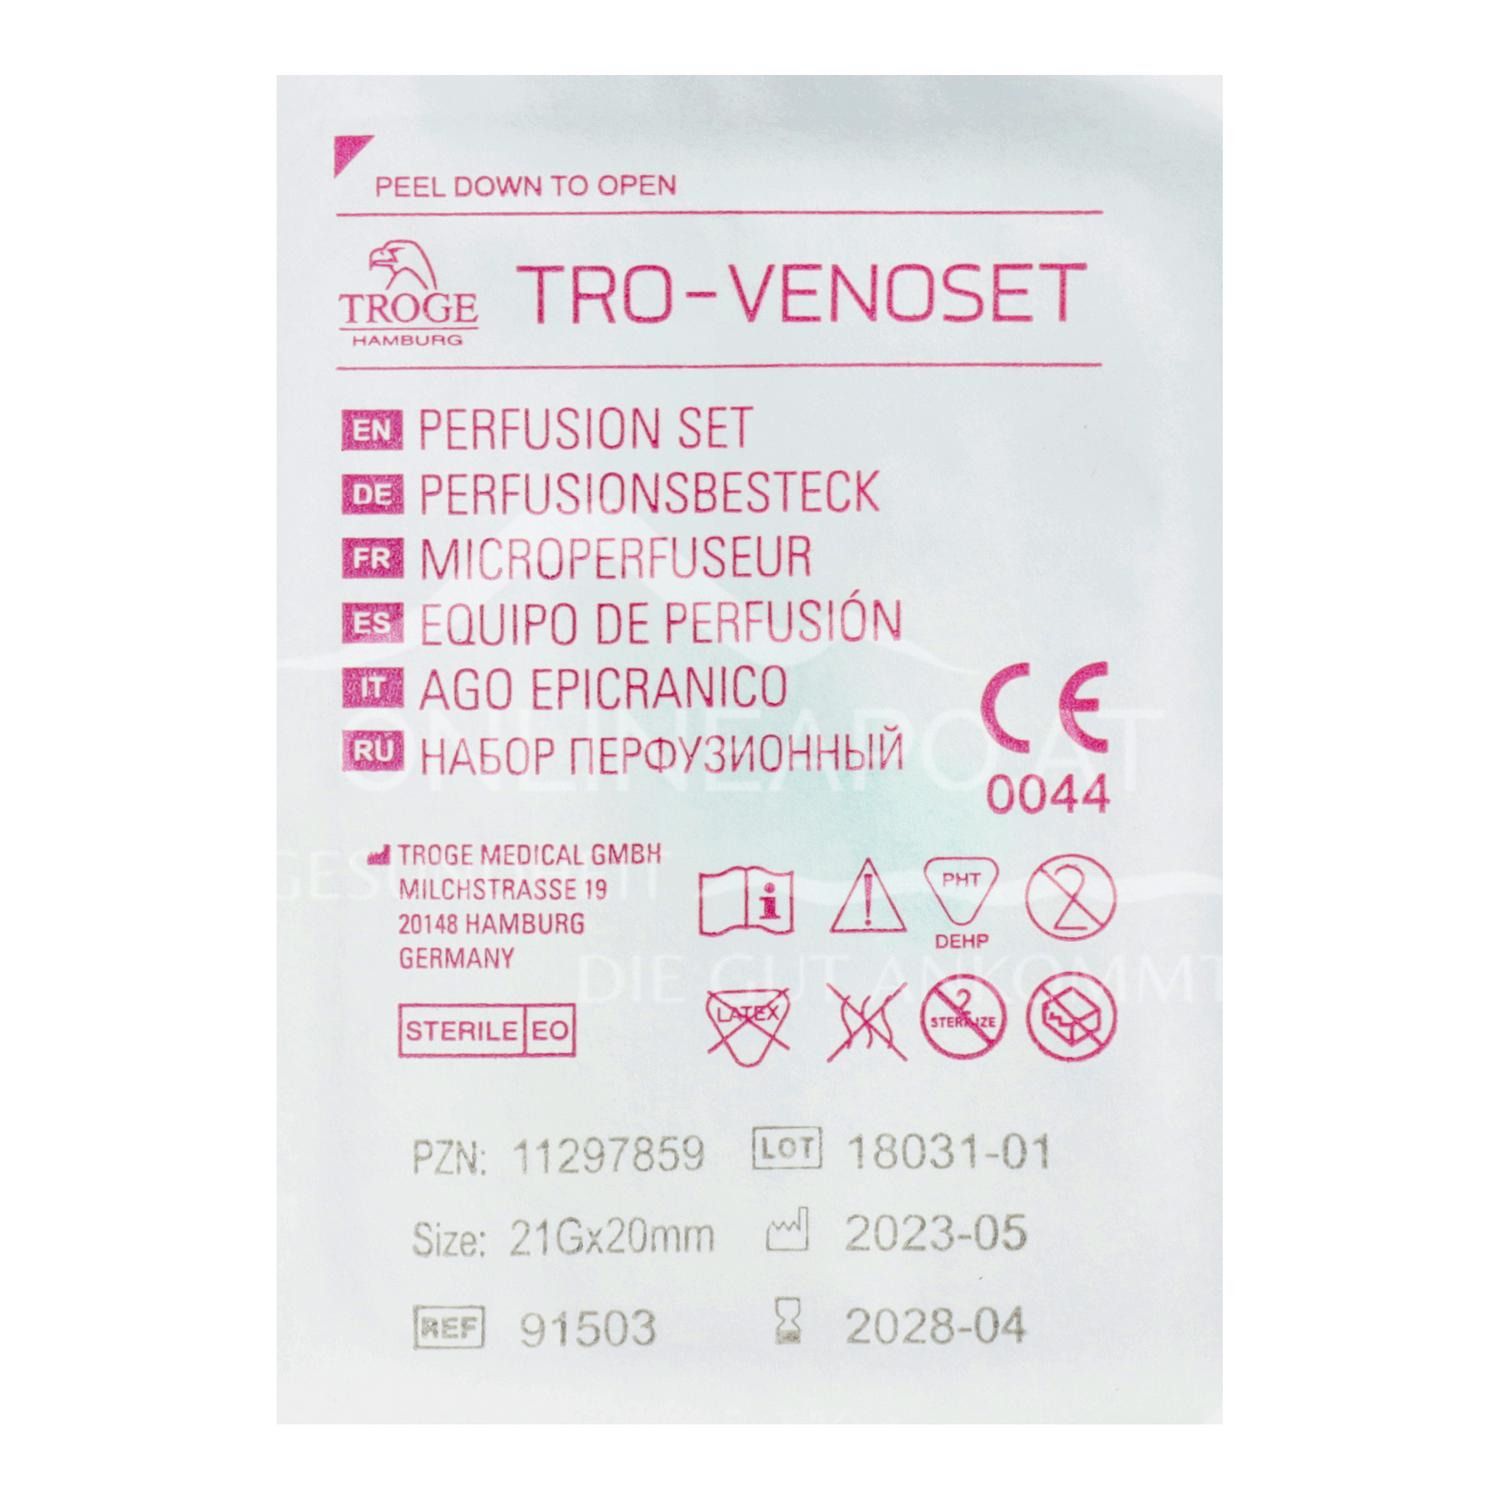 TRO-VENOSET Perfusionsbesteck grün, 21G, 0,81 x 20 mm